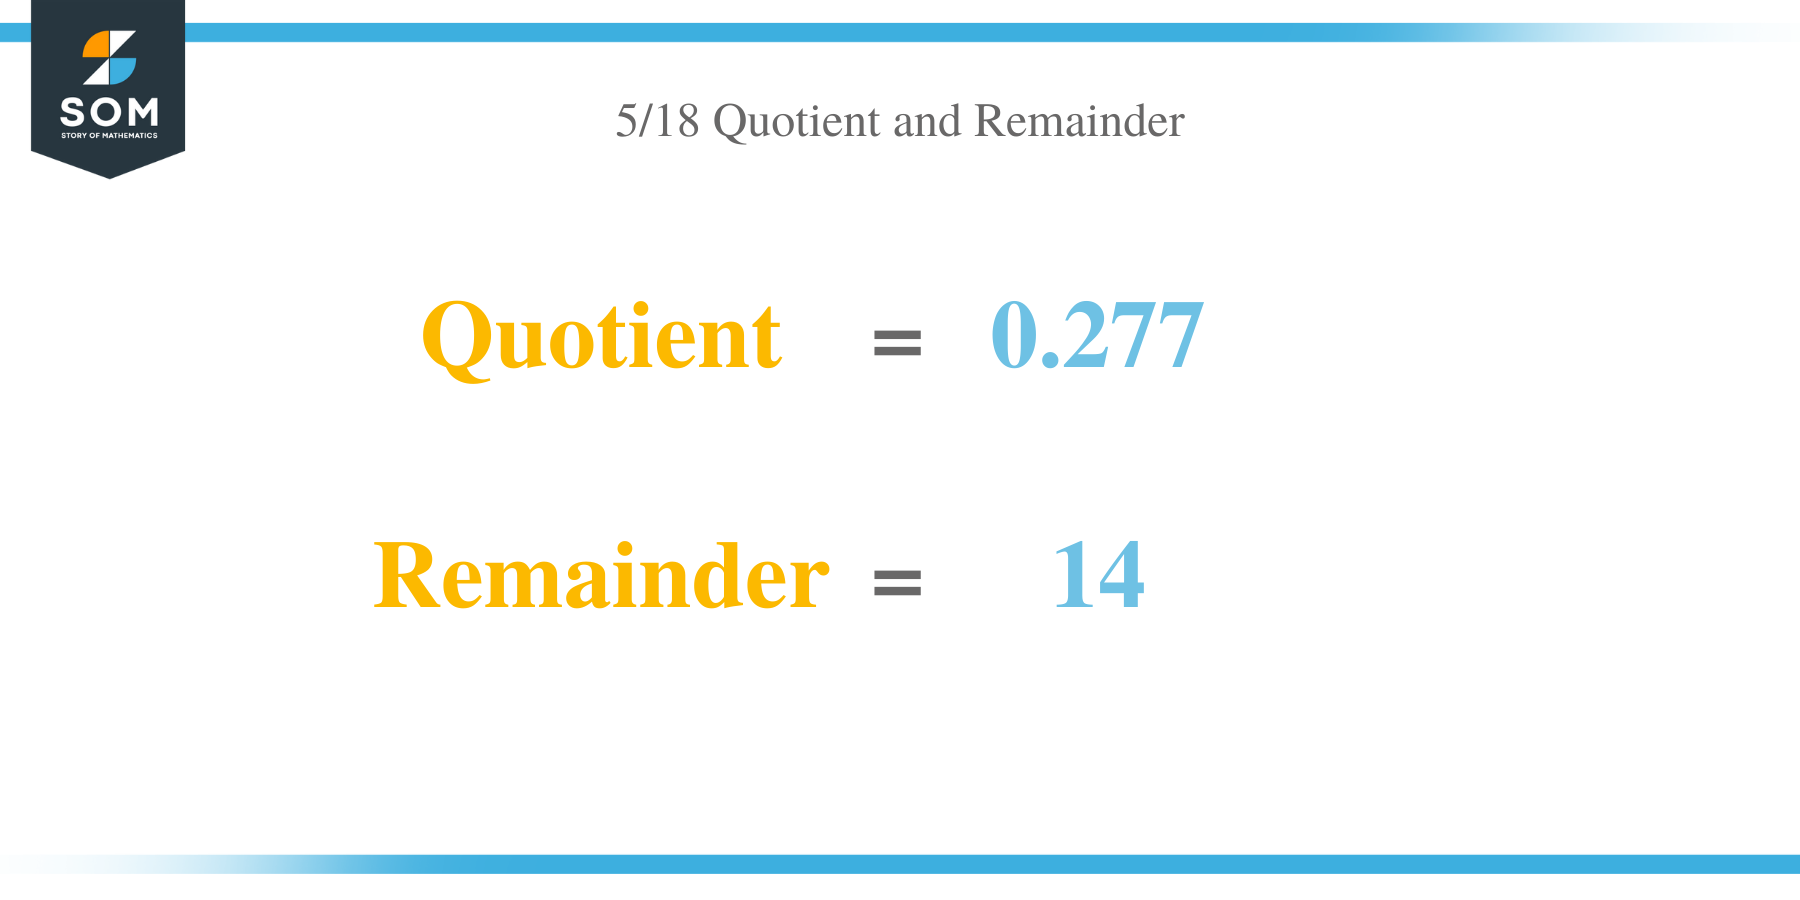 Quotient and Remainder of 5 per 18